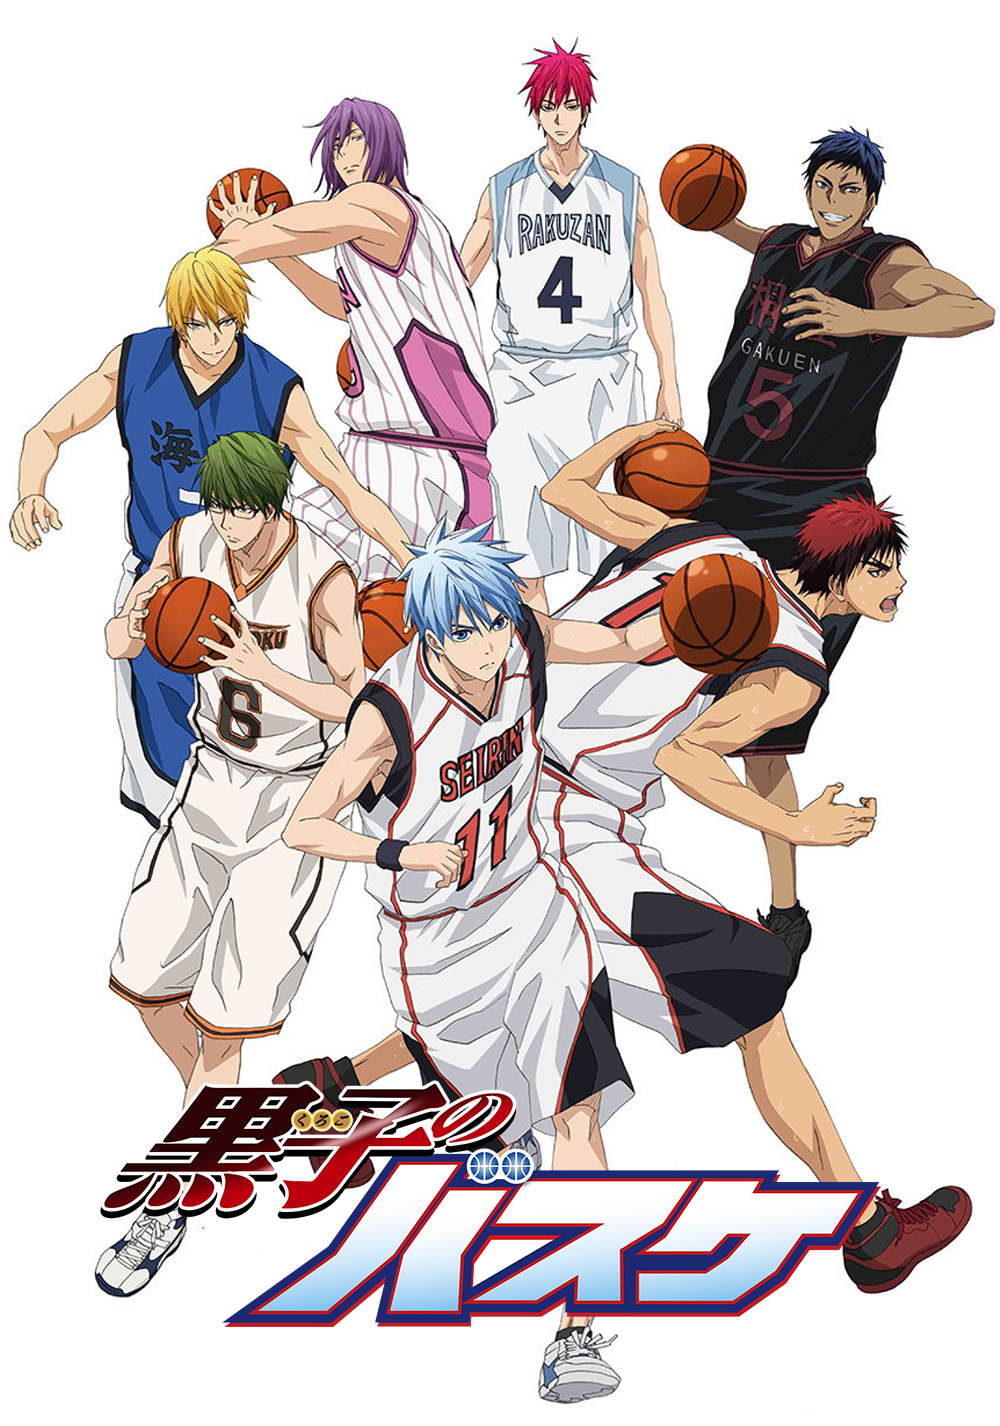 Kuroko's Basketball (Full English Dub Cast), Idea Wiki